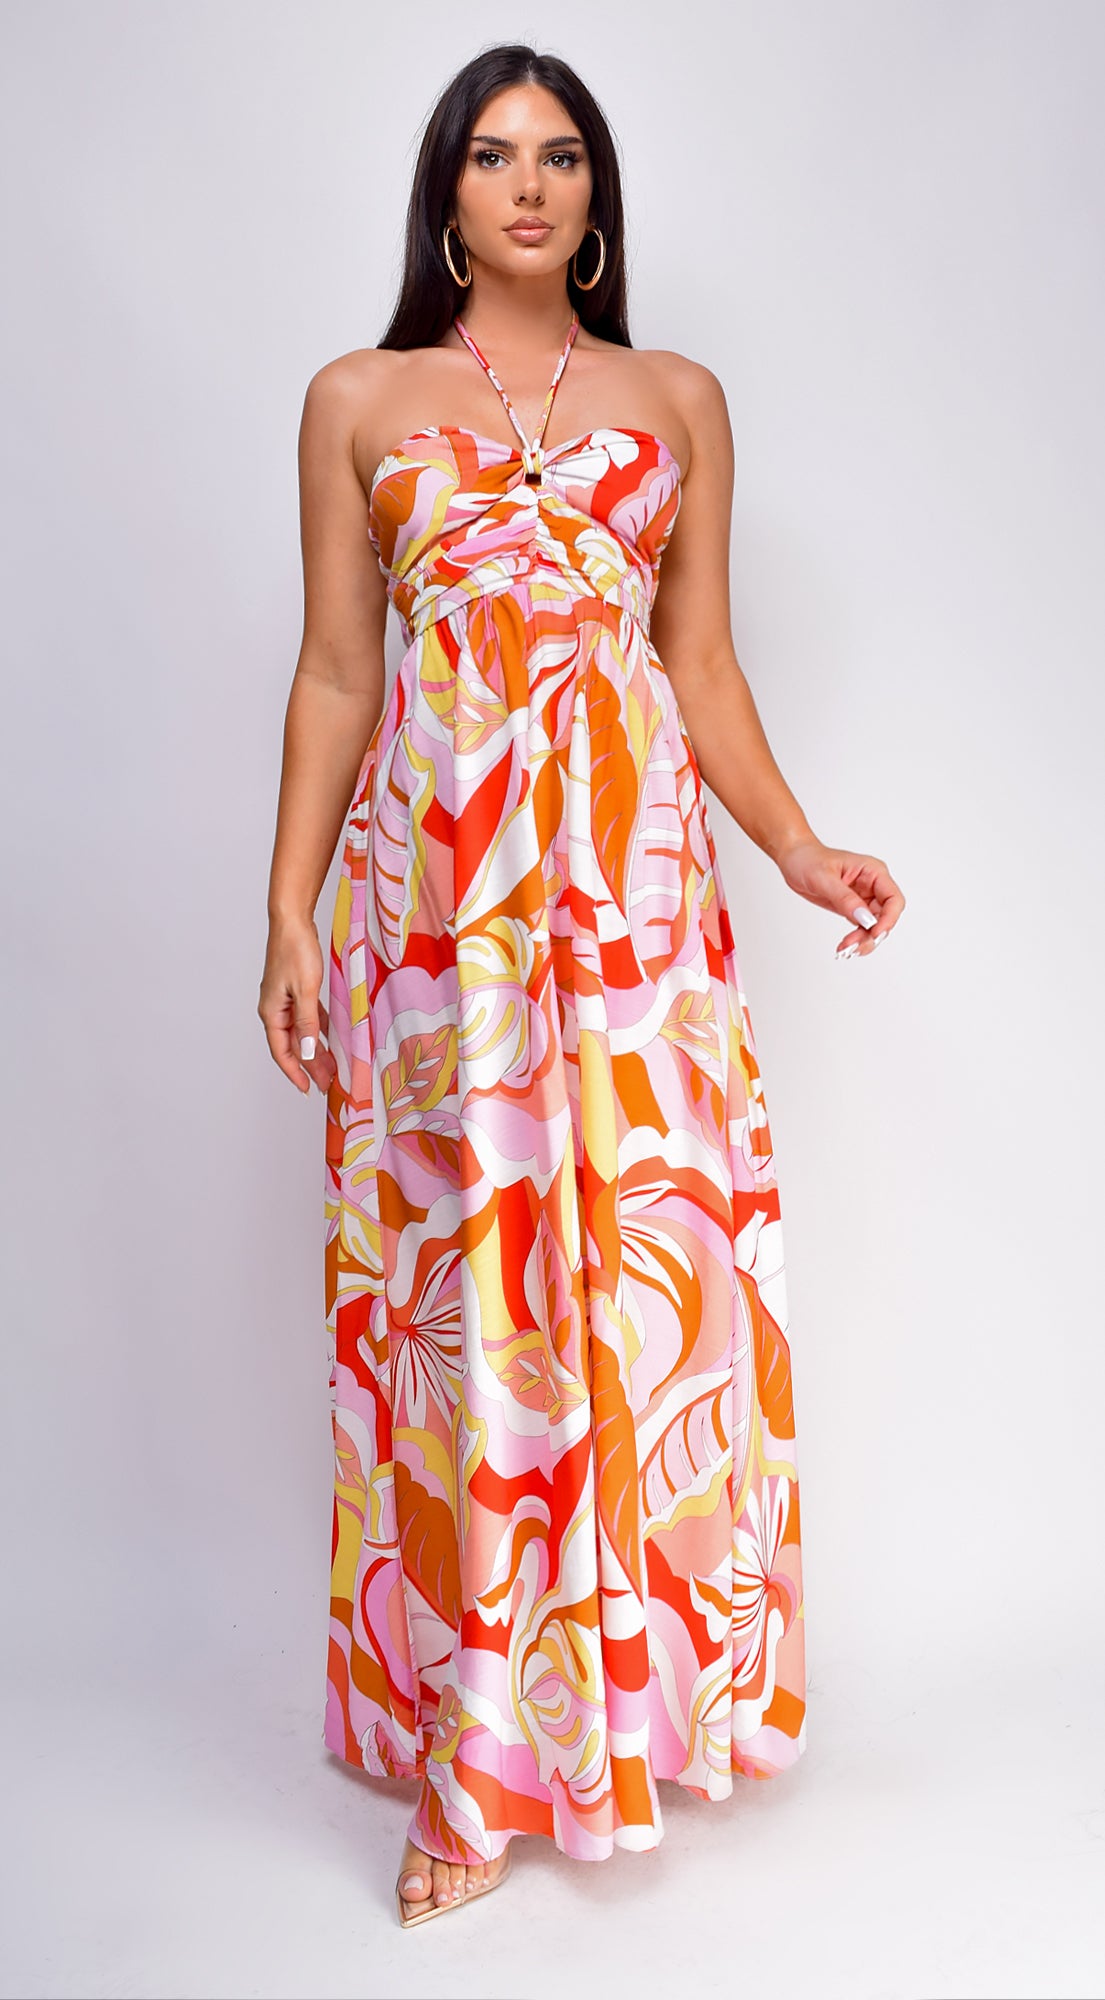 Summer Orange Multi Color Print Maxi Dress